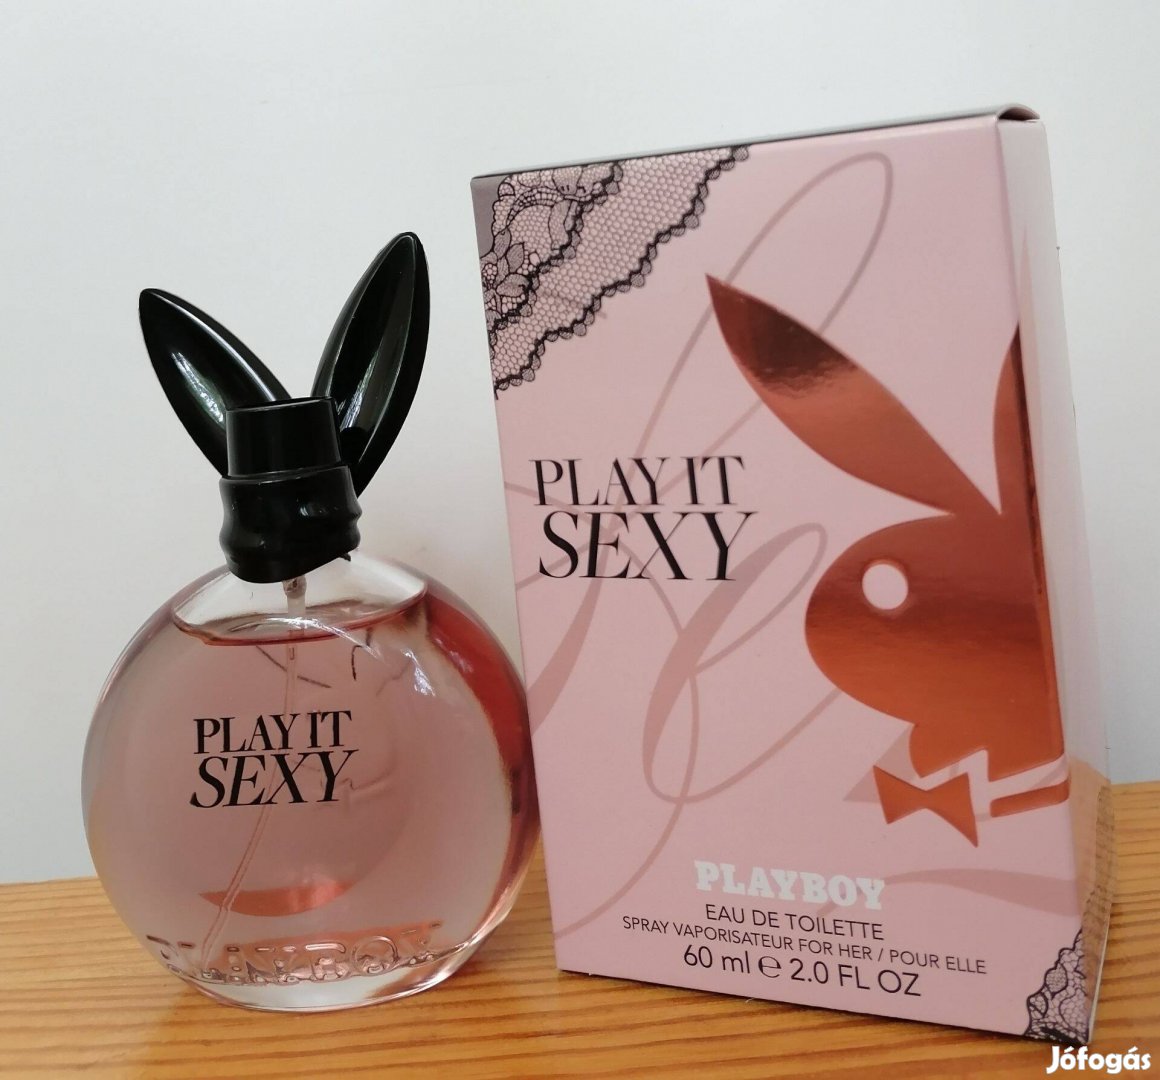 Új!Playboy Play it Sexy 60ml eau de toilette